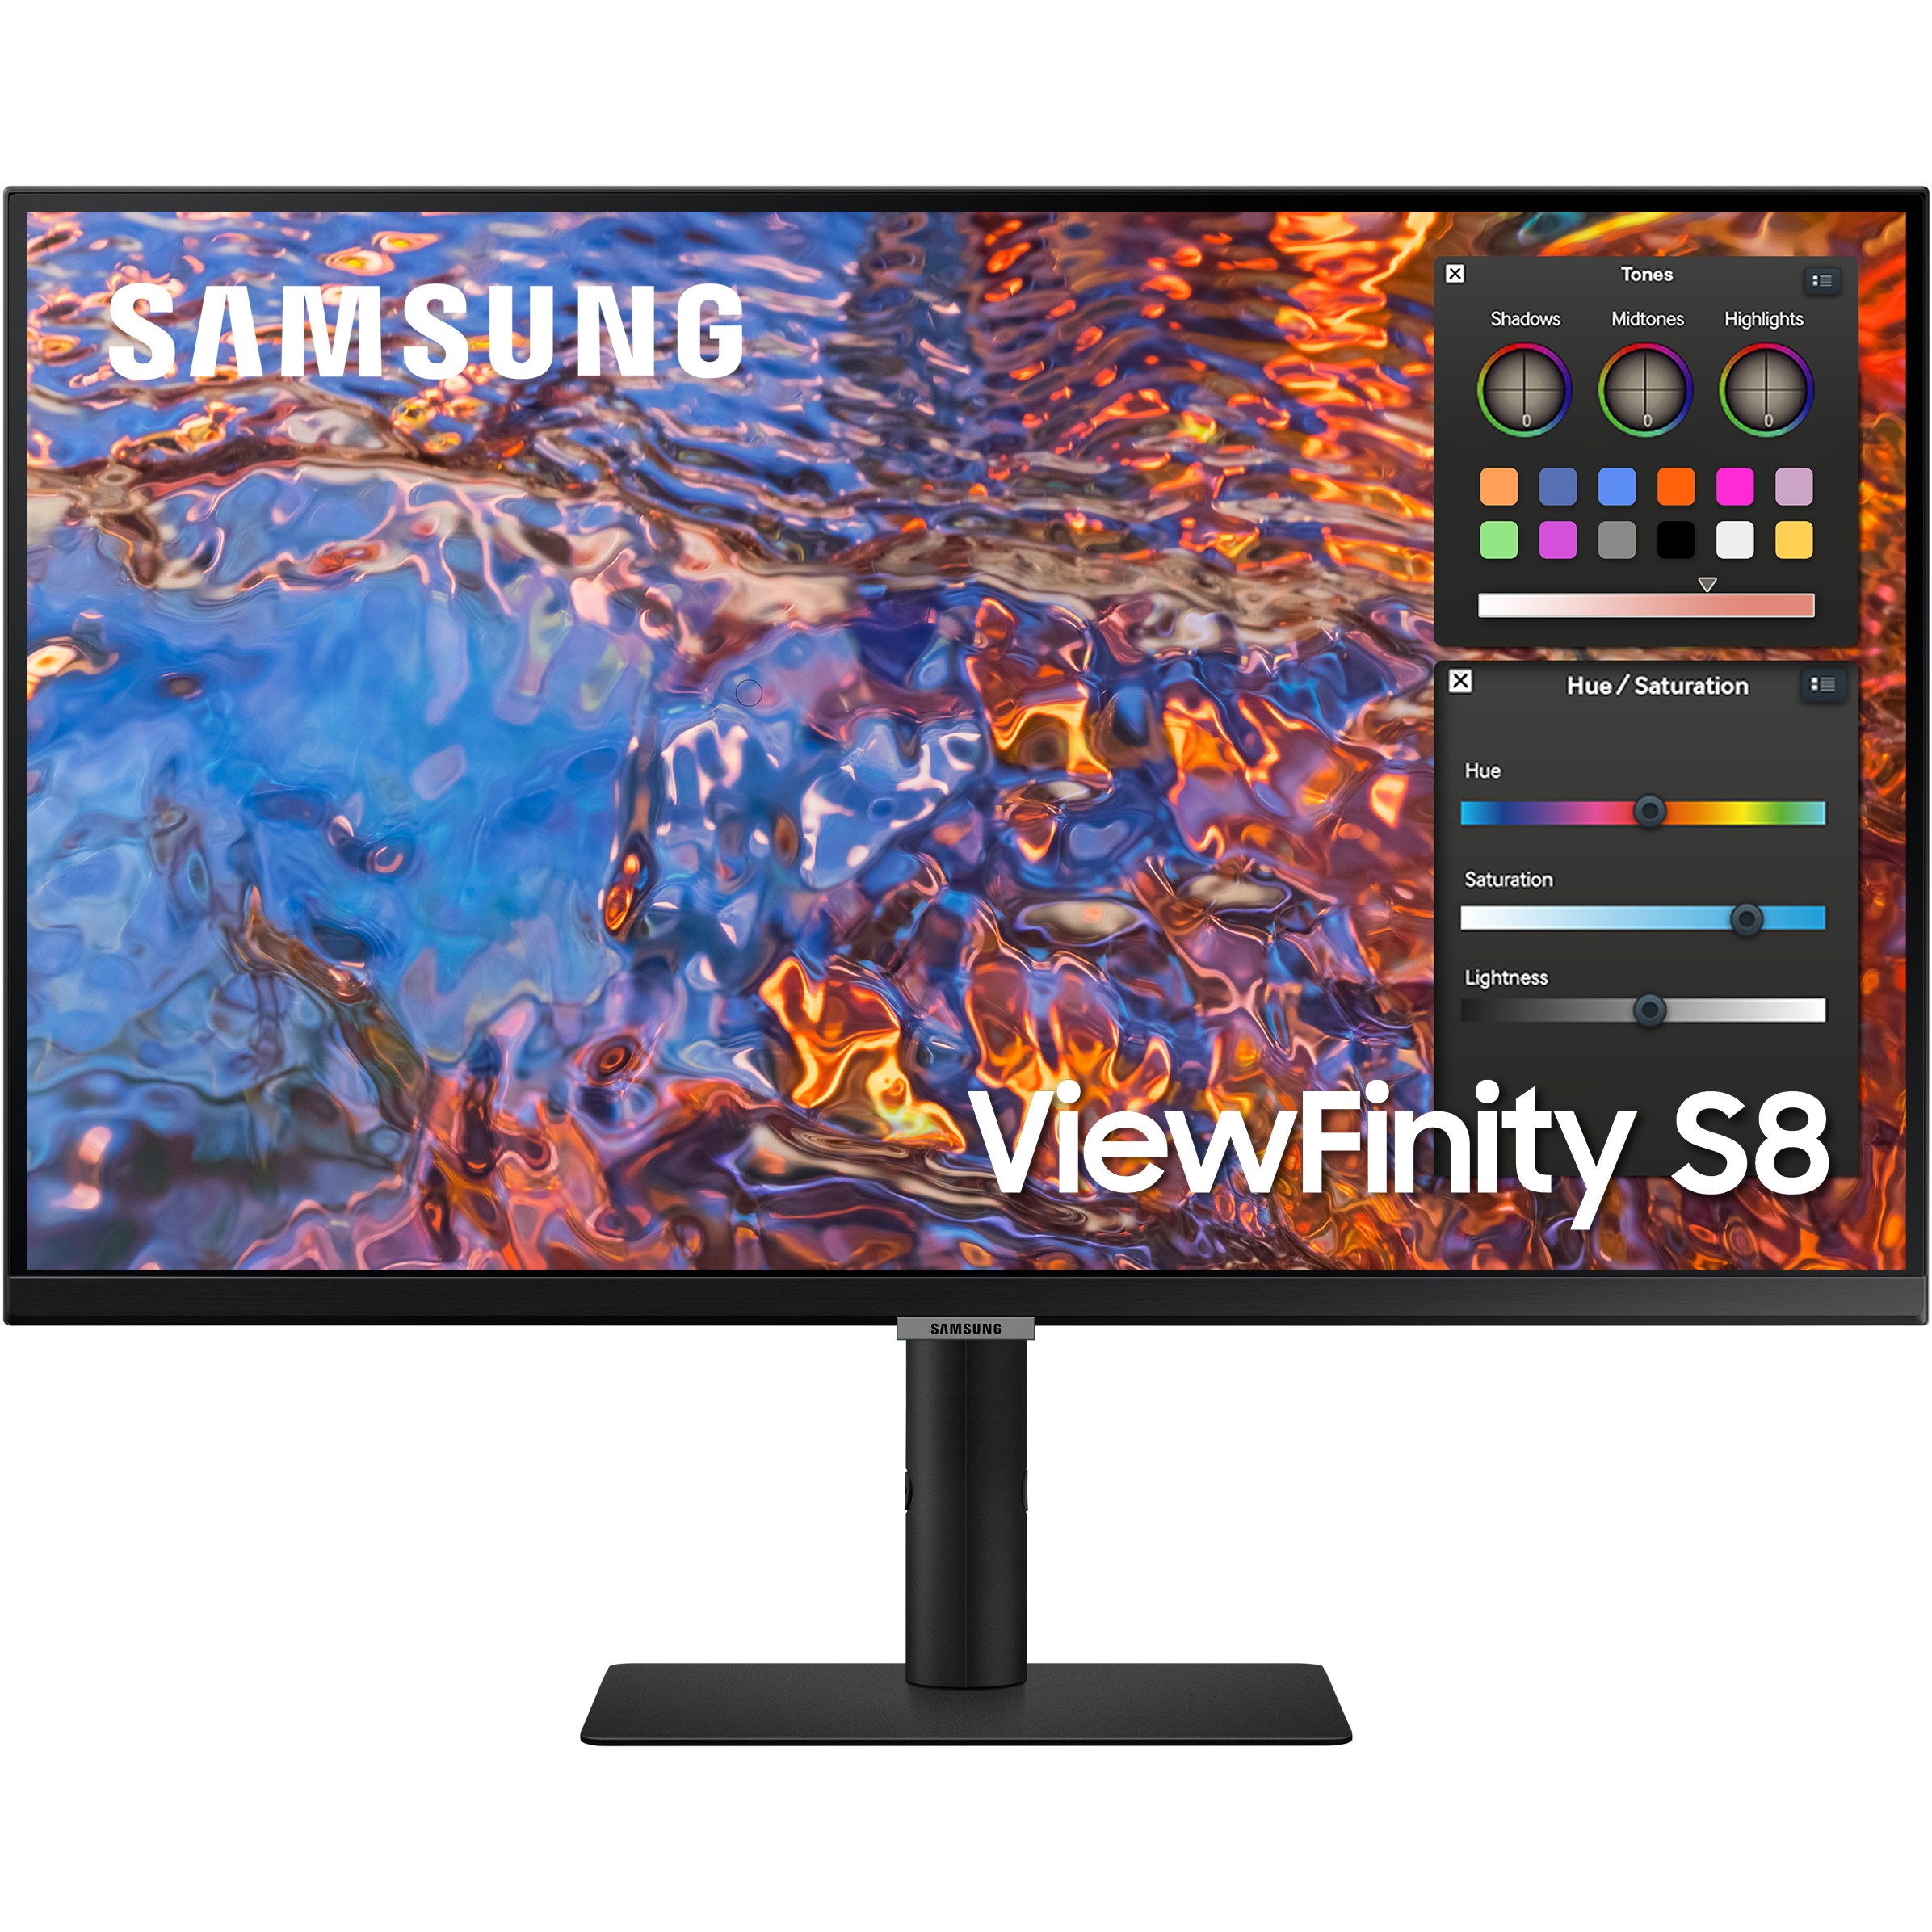 Samsung ViewFinity S80PB computer monitor